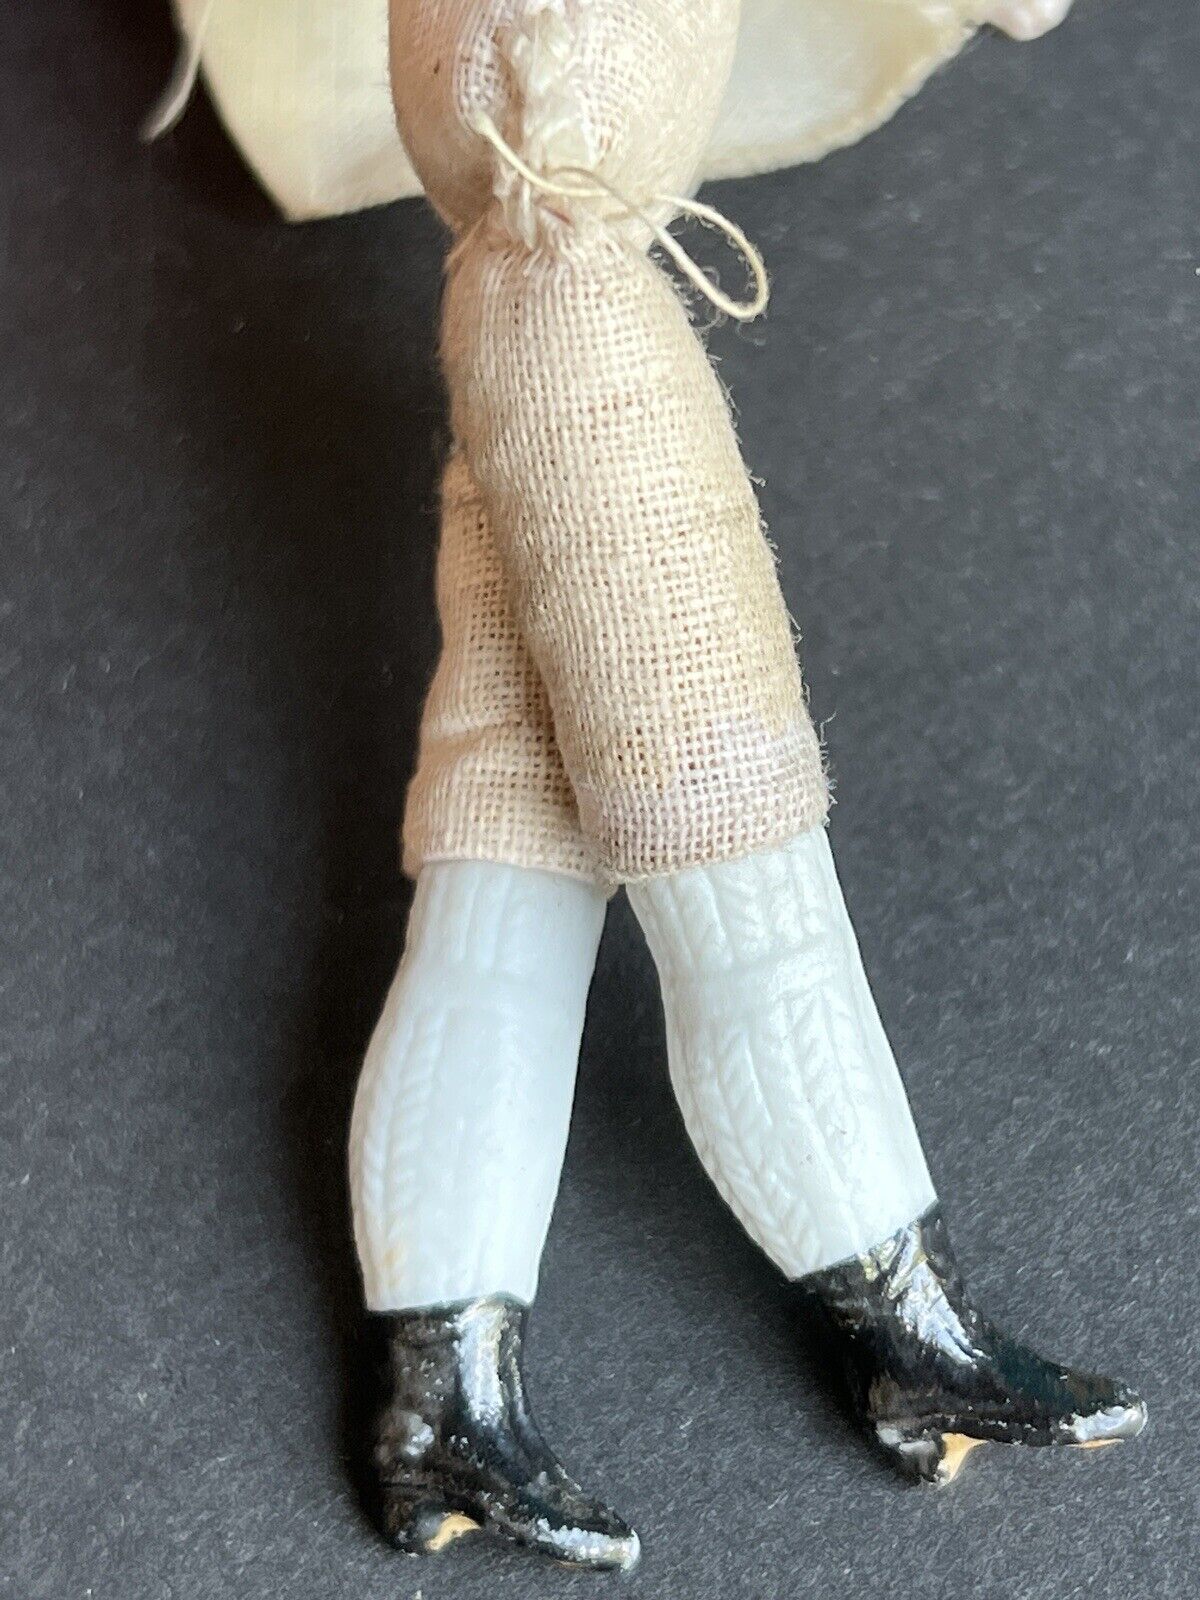 Rare Antique German 4.75” Bisque Shoulder Head Dollhouse Bald Man Doll